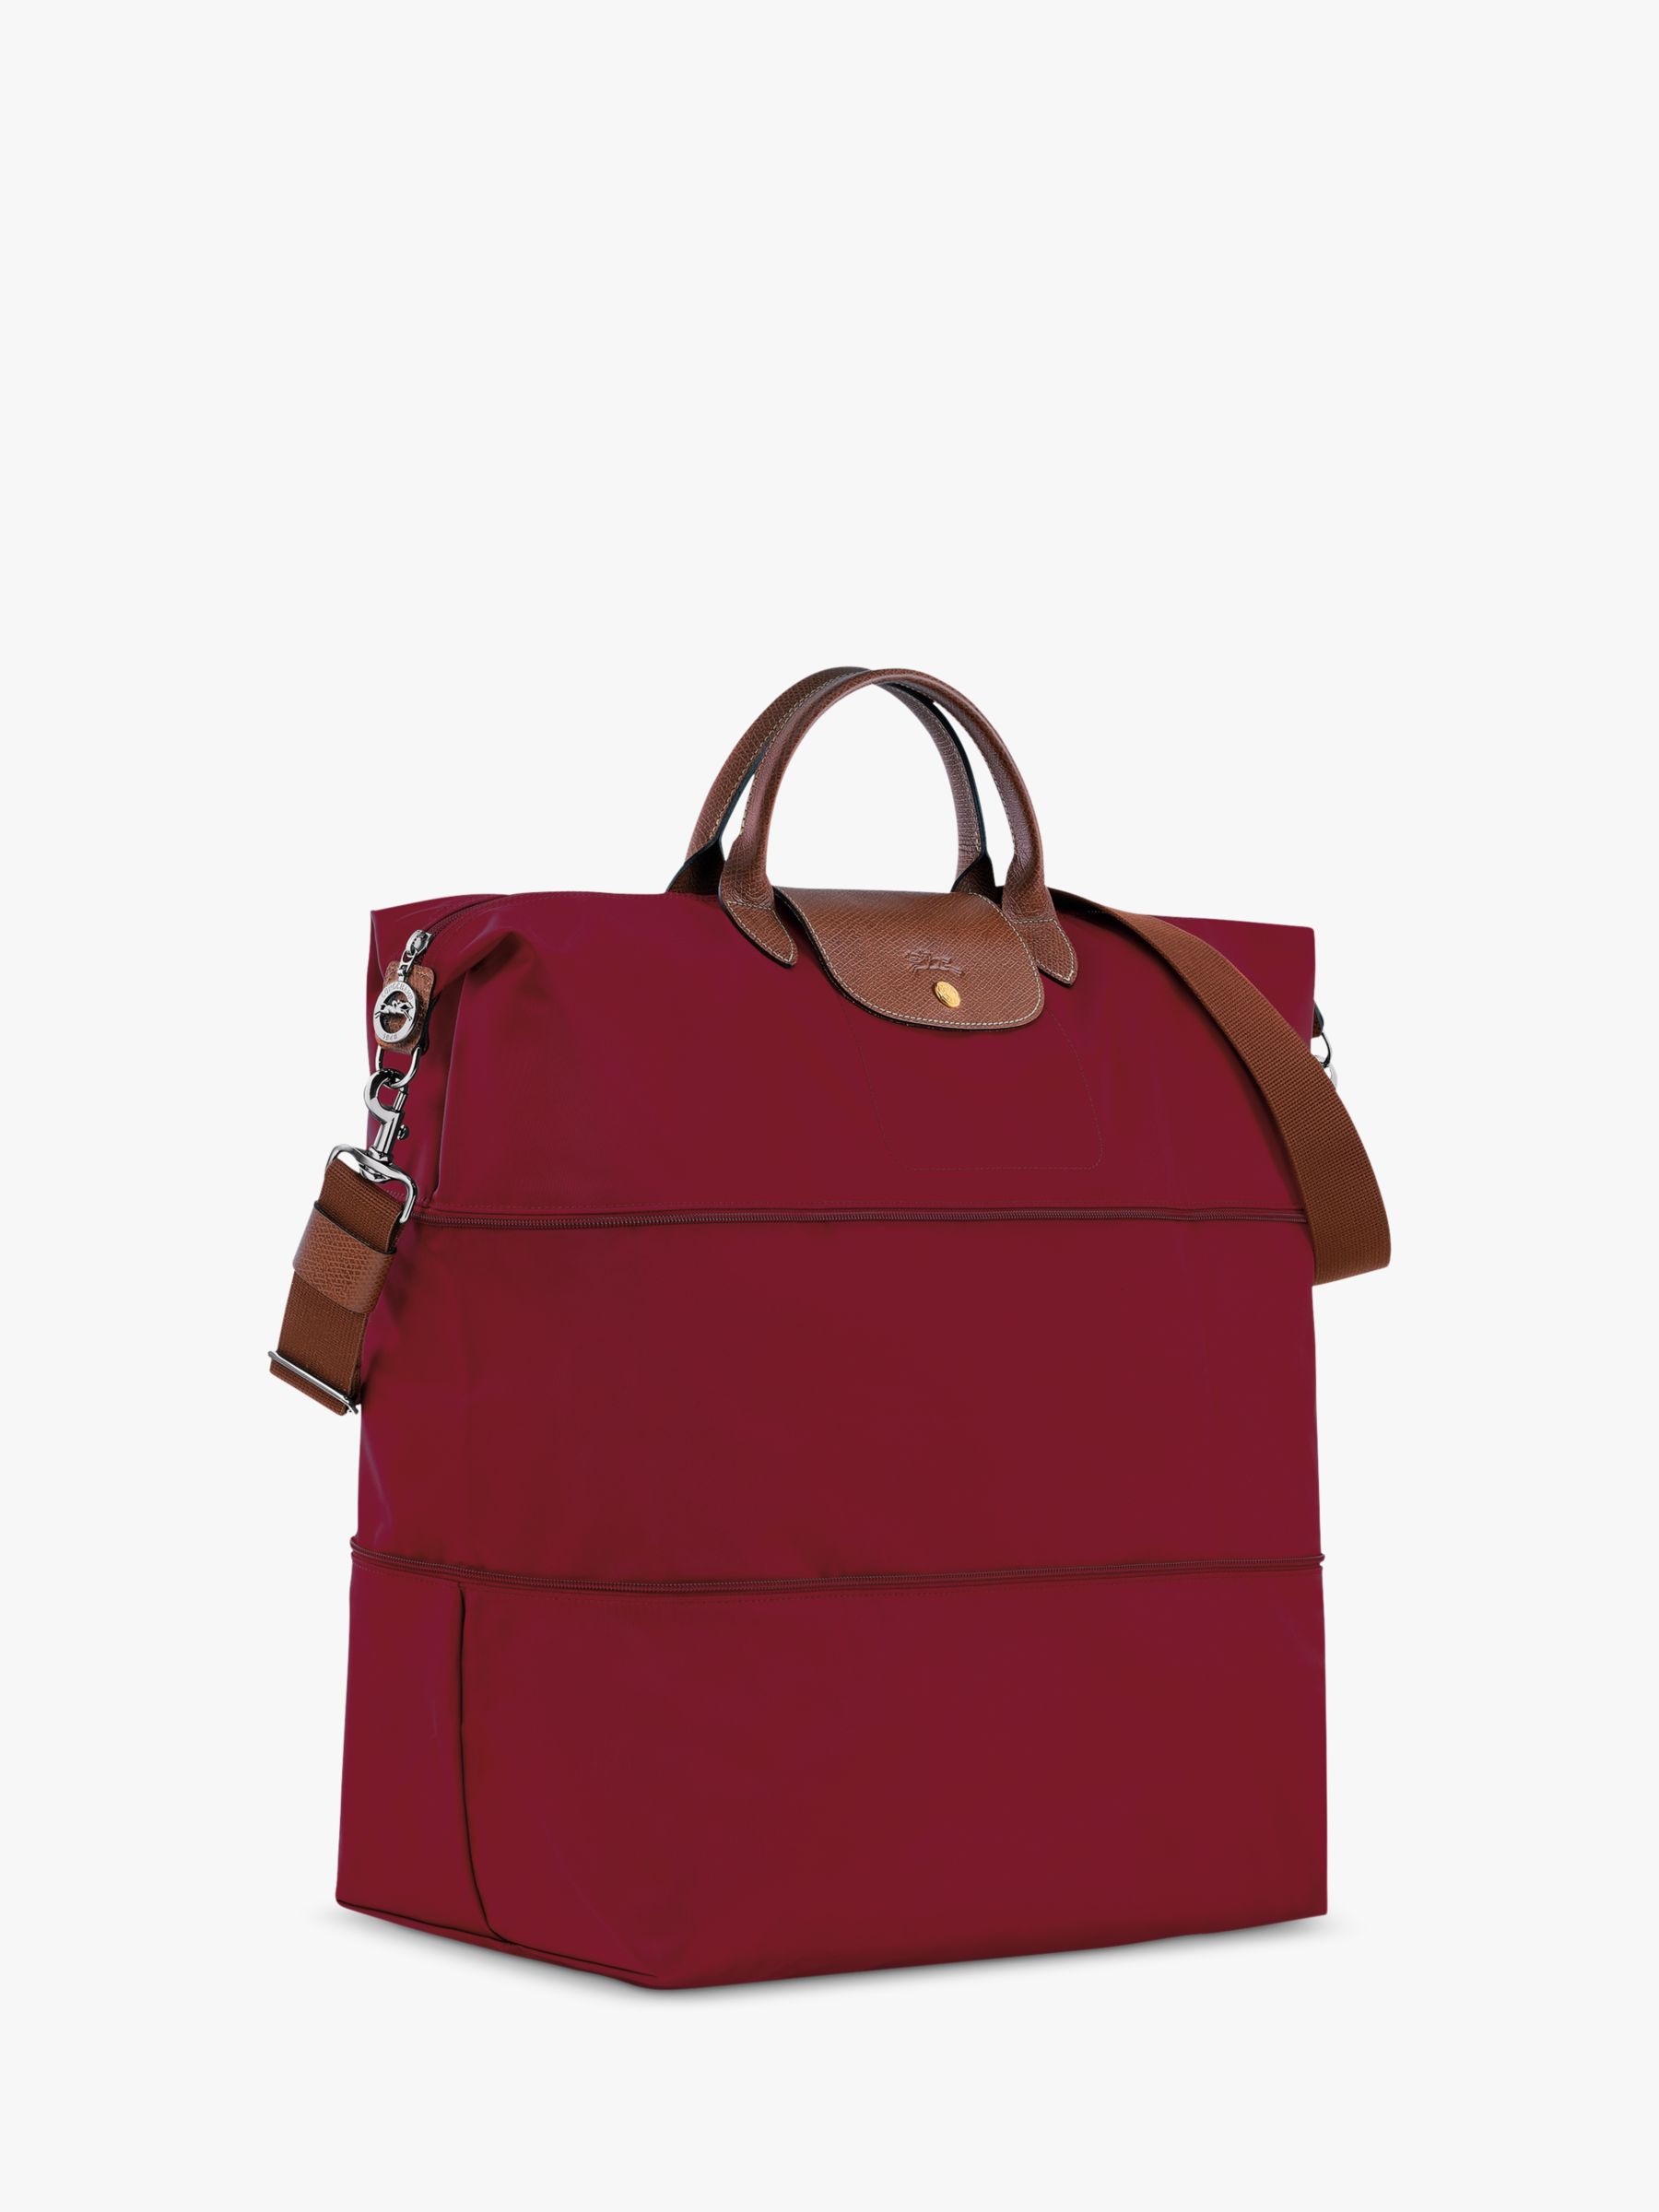 Longchamp Le Pliage Original Shoulder Bag, Deep Red at John Lewis & Partners